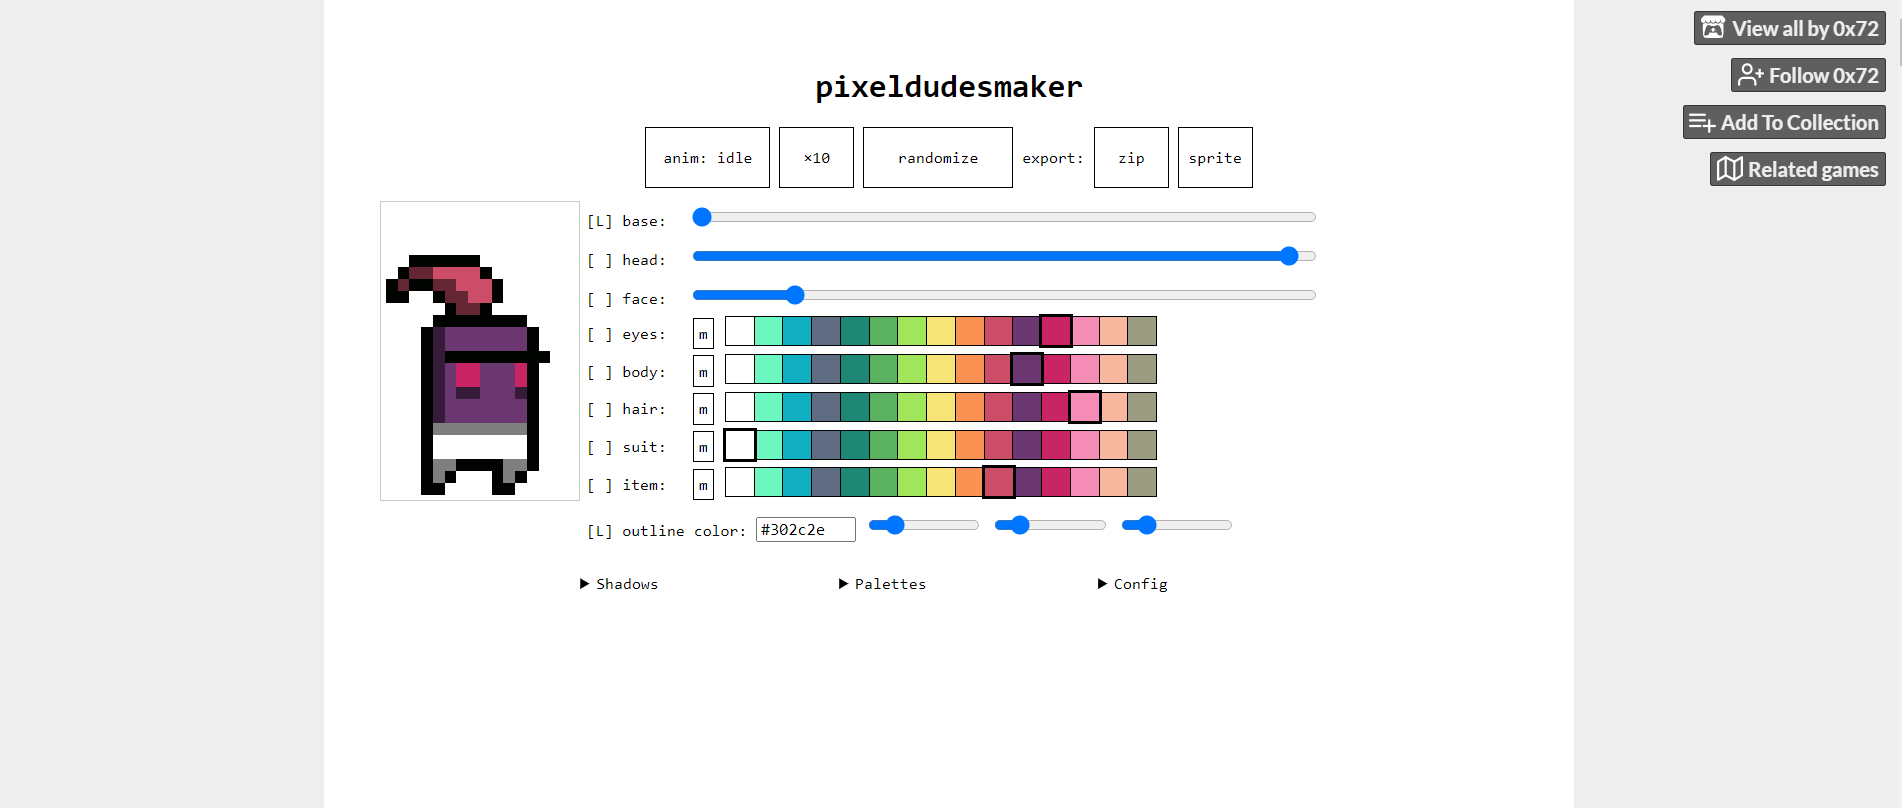 pixeldudesmaker